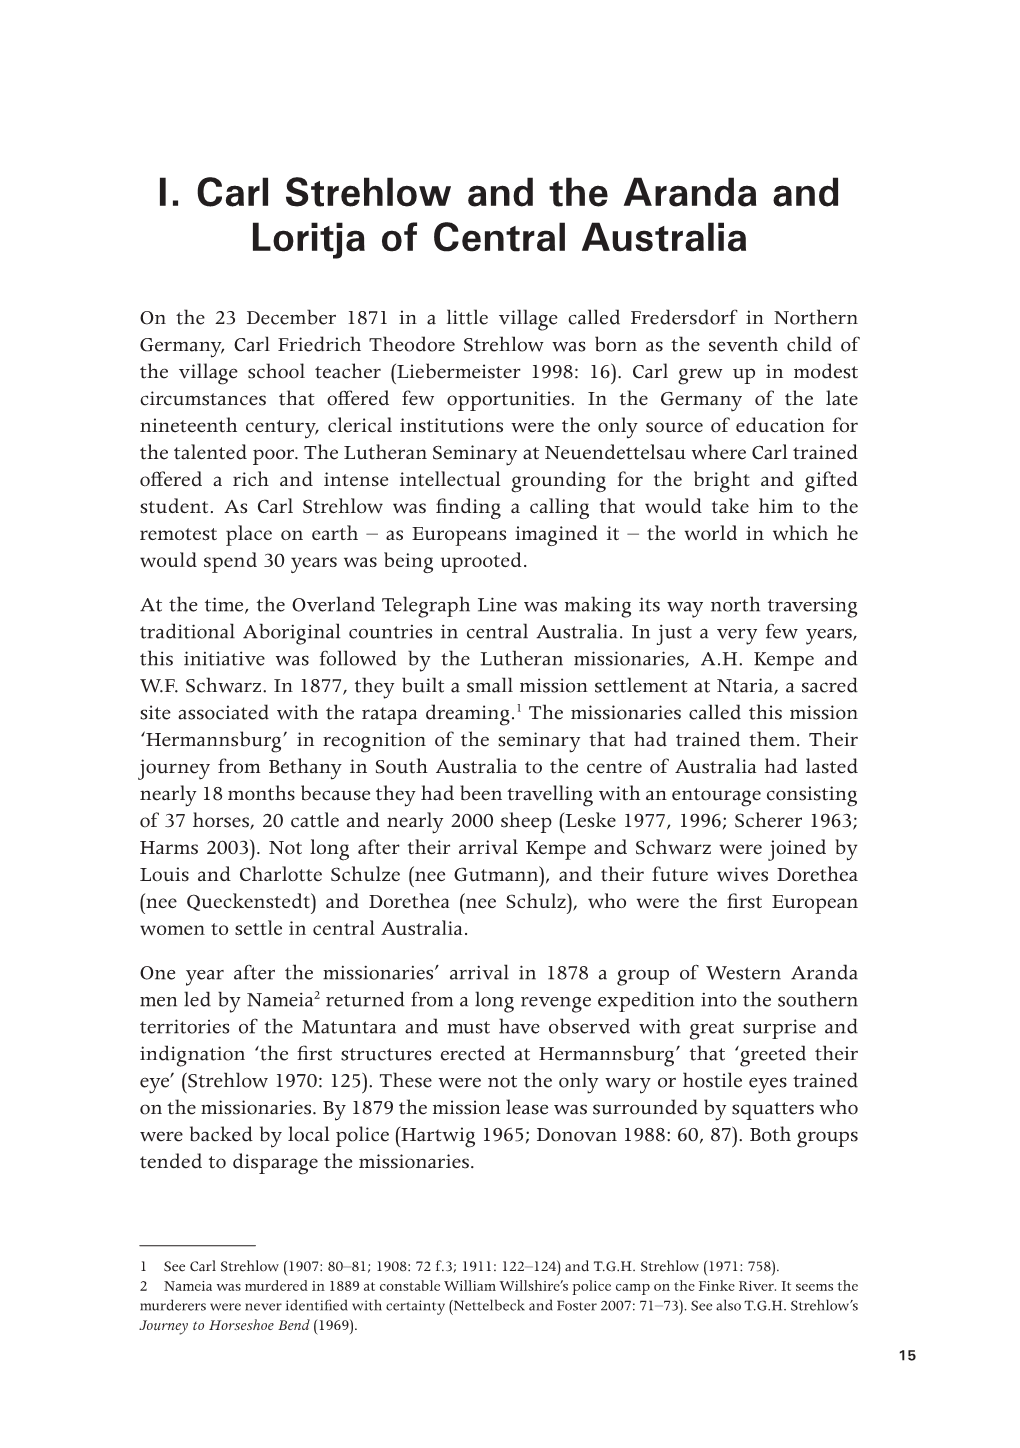 I. Carl Strehlow and the Aranda and Loritja of Central Australia